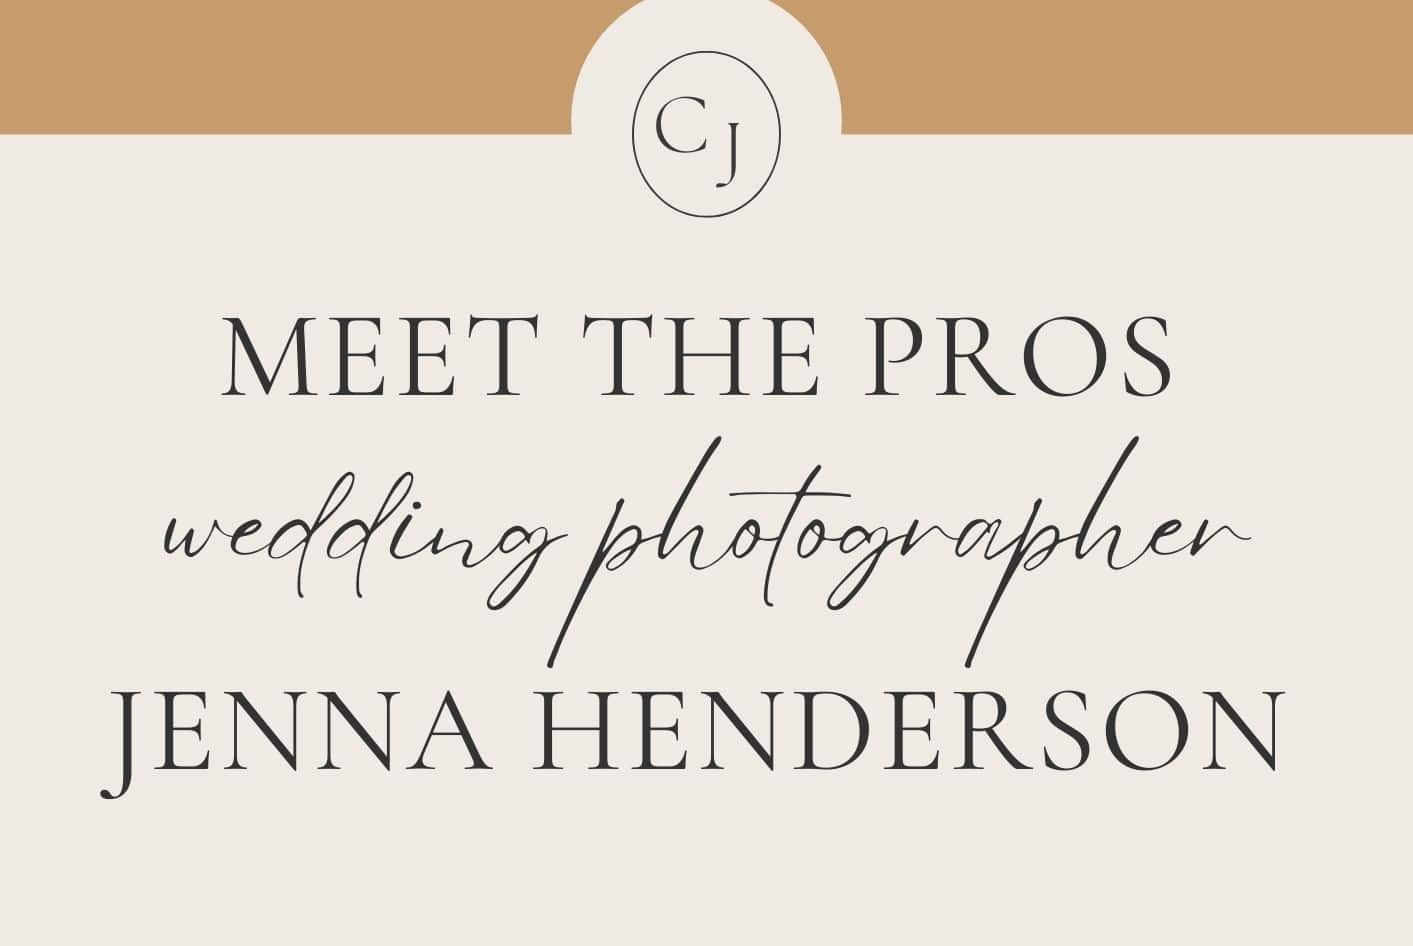 Meet the Pros: Jenna Henderson, Photographer